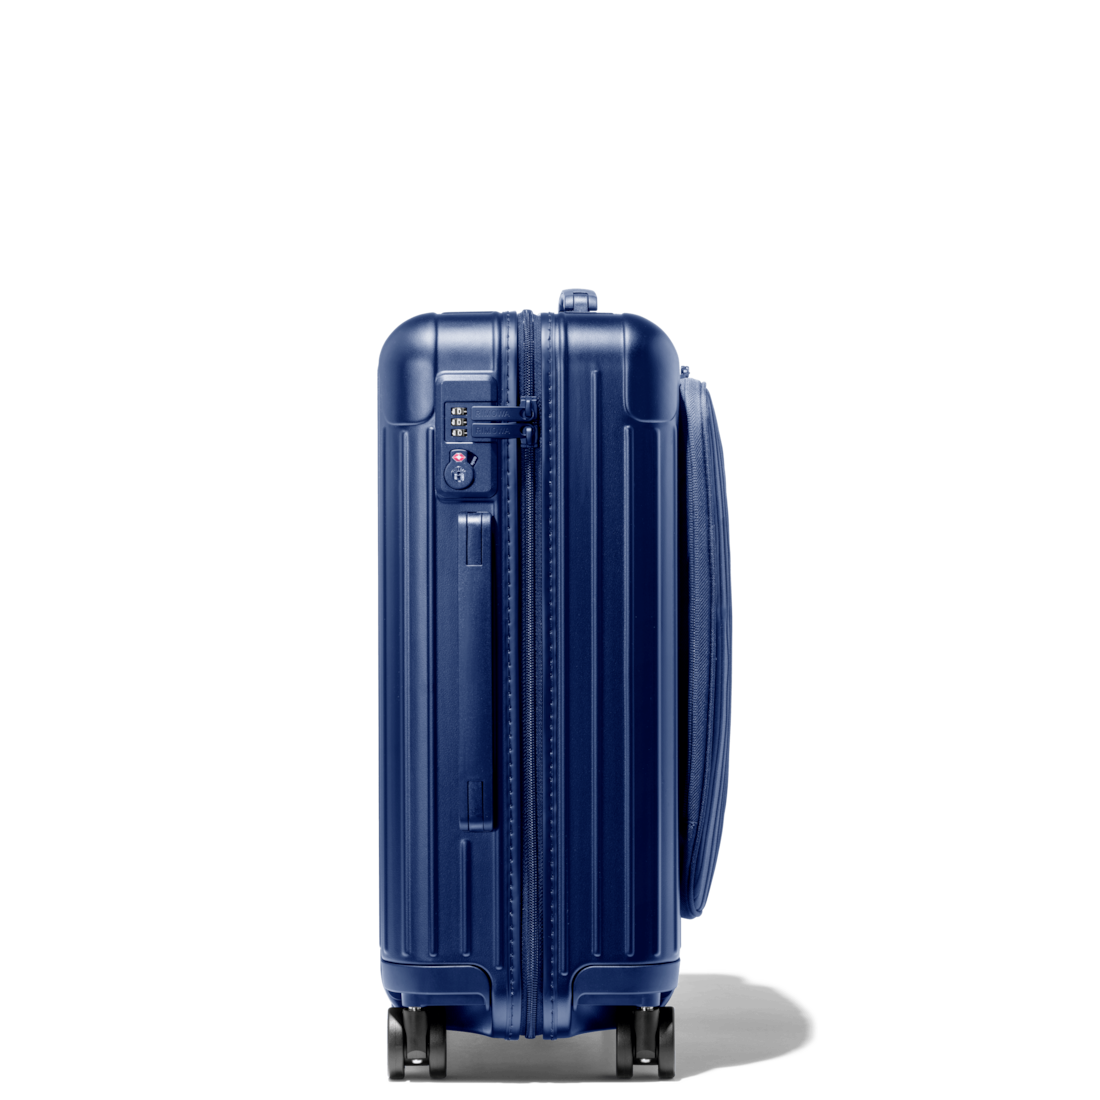 rimowa luggage blue